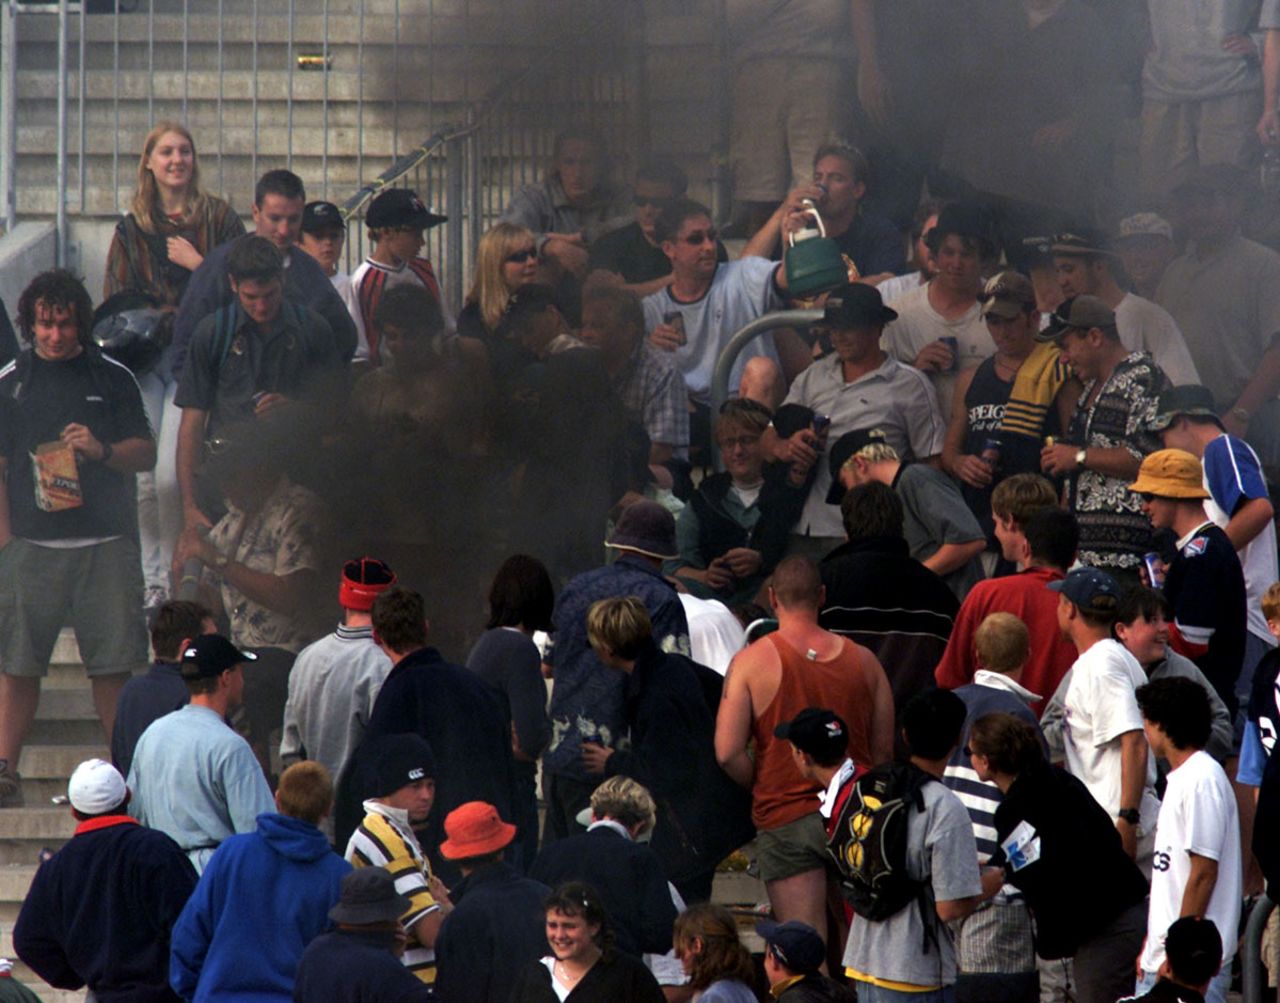 Smoke emerges from the stands in Carisbrook, New Zealand v Australia, 3rd ODI, Dunedin, February 23, 2000